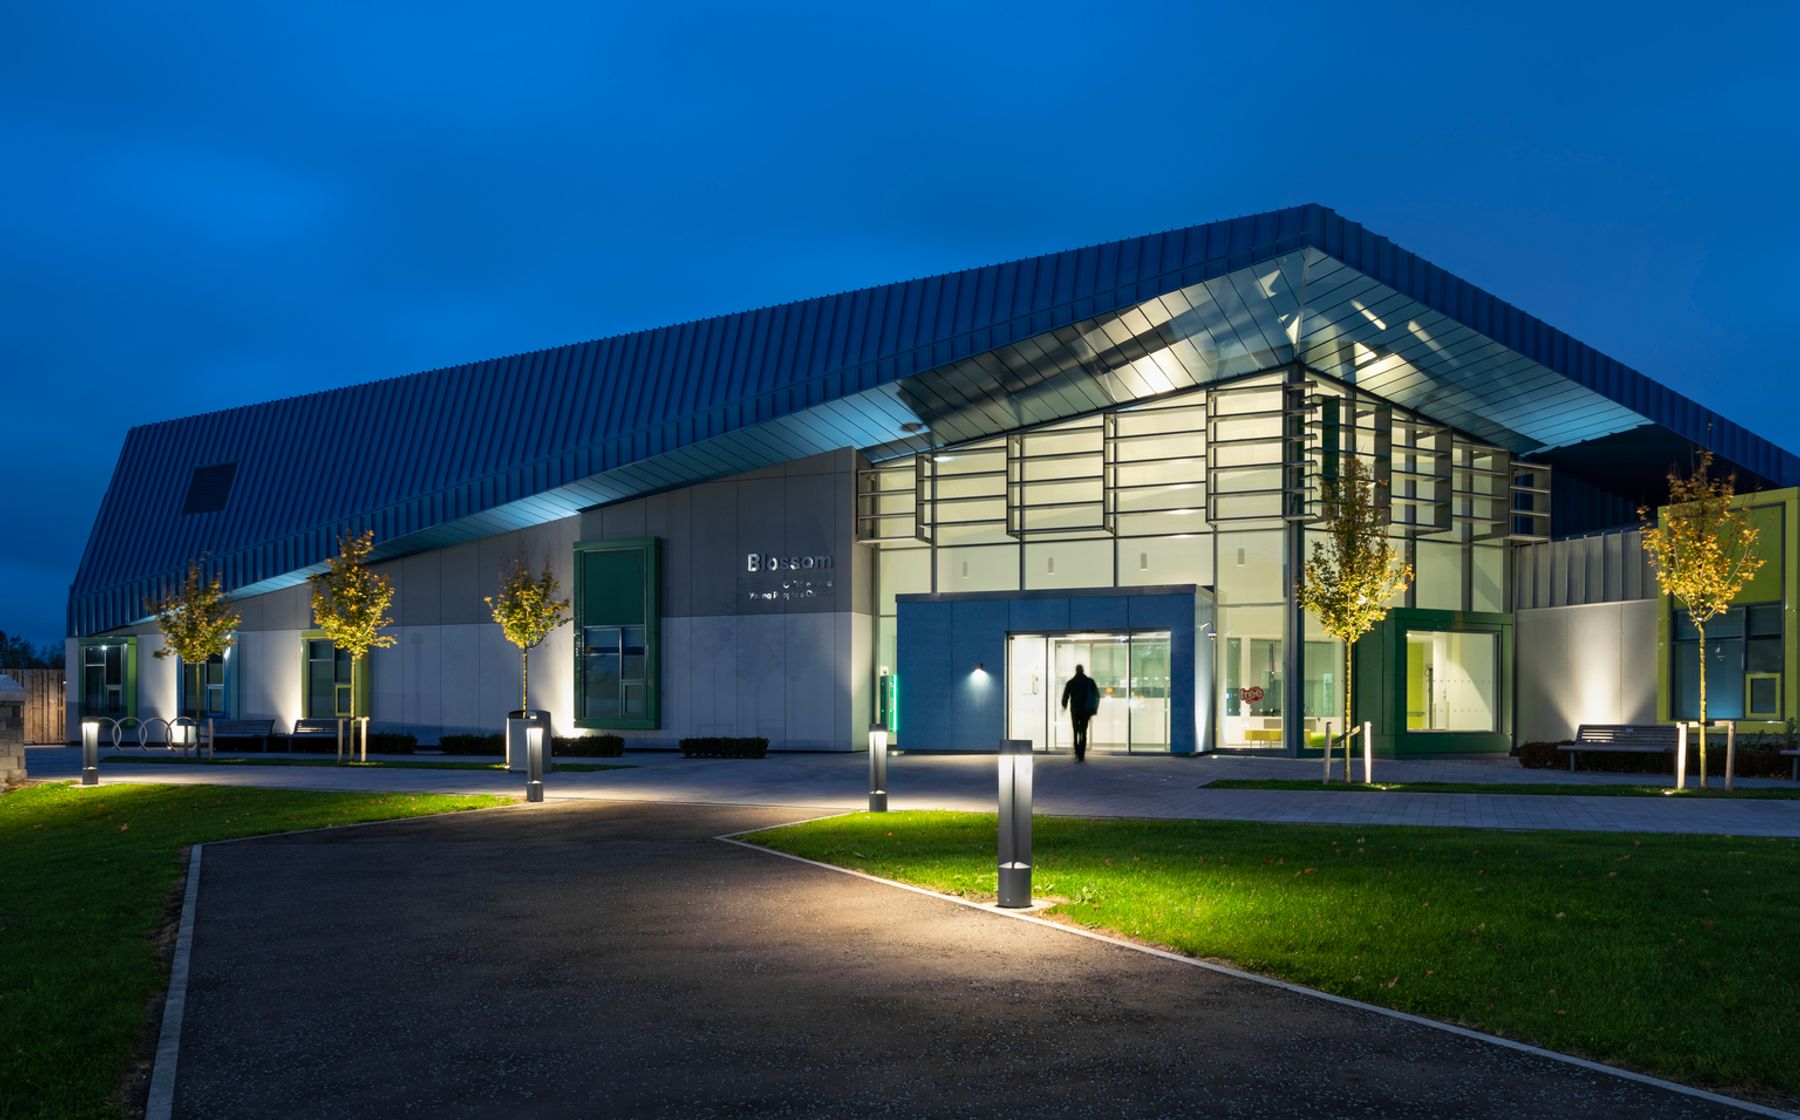 Craigavon Paediatric Centre, Belfast. Architettura: Todd Architects, Belfast. Progettazione illuminotecnica: Arup Lighting, Londra. Fotografia: Gavriil Papadiotis, Londra.